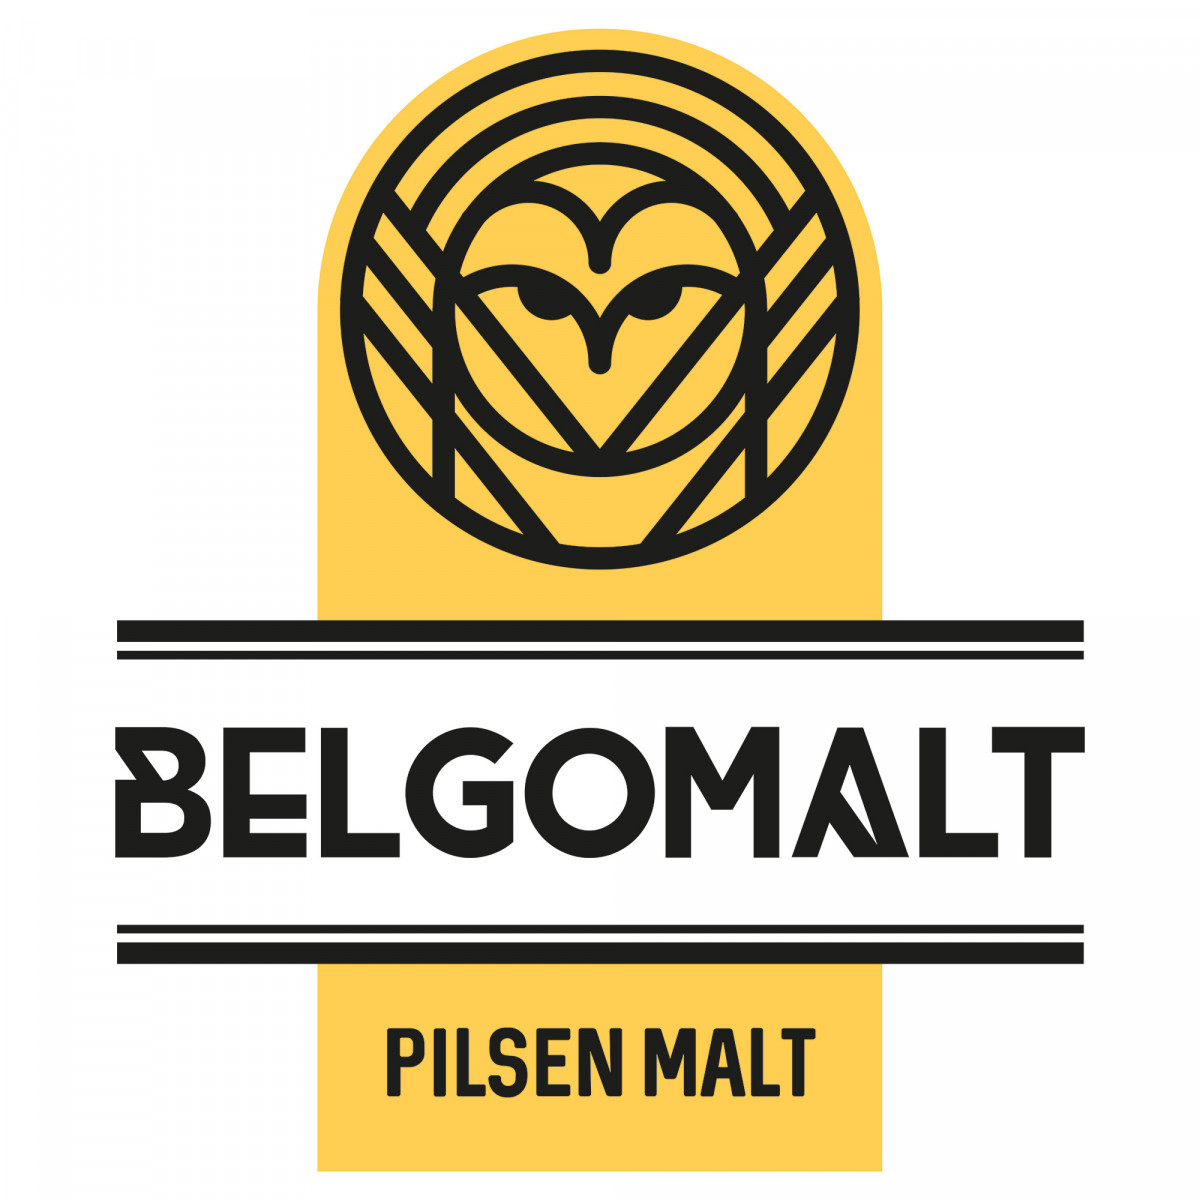 Belgomalt Pilsen 2,5 - 4,5 EBC 5 kg